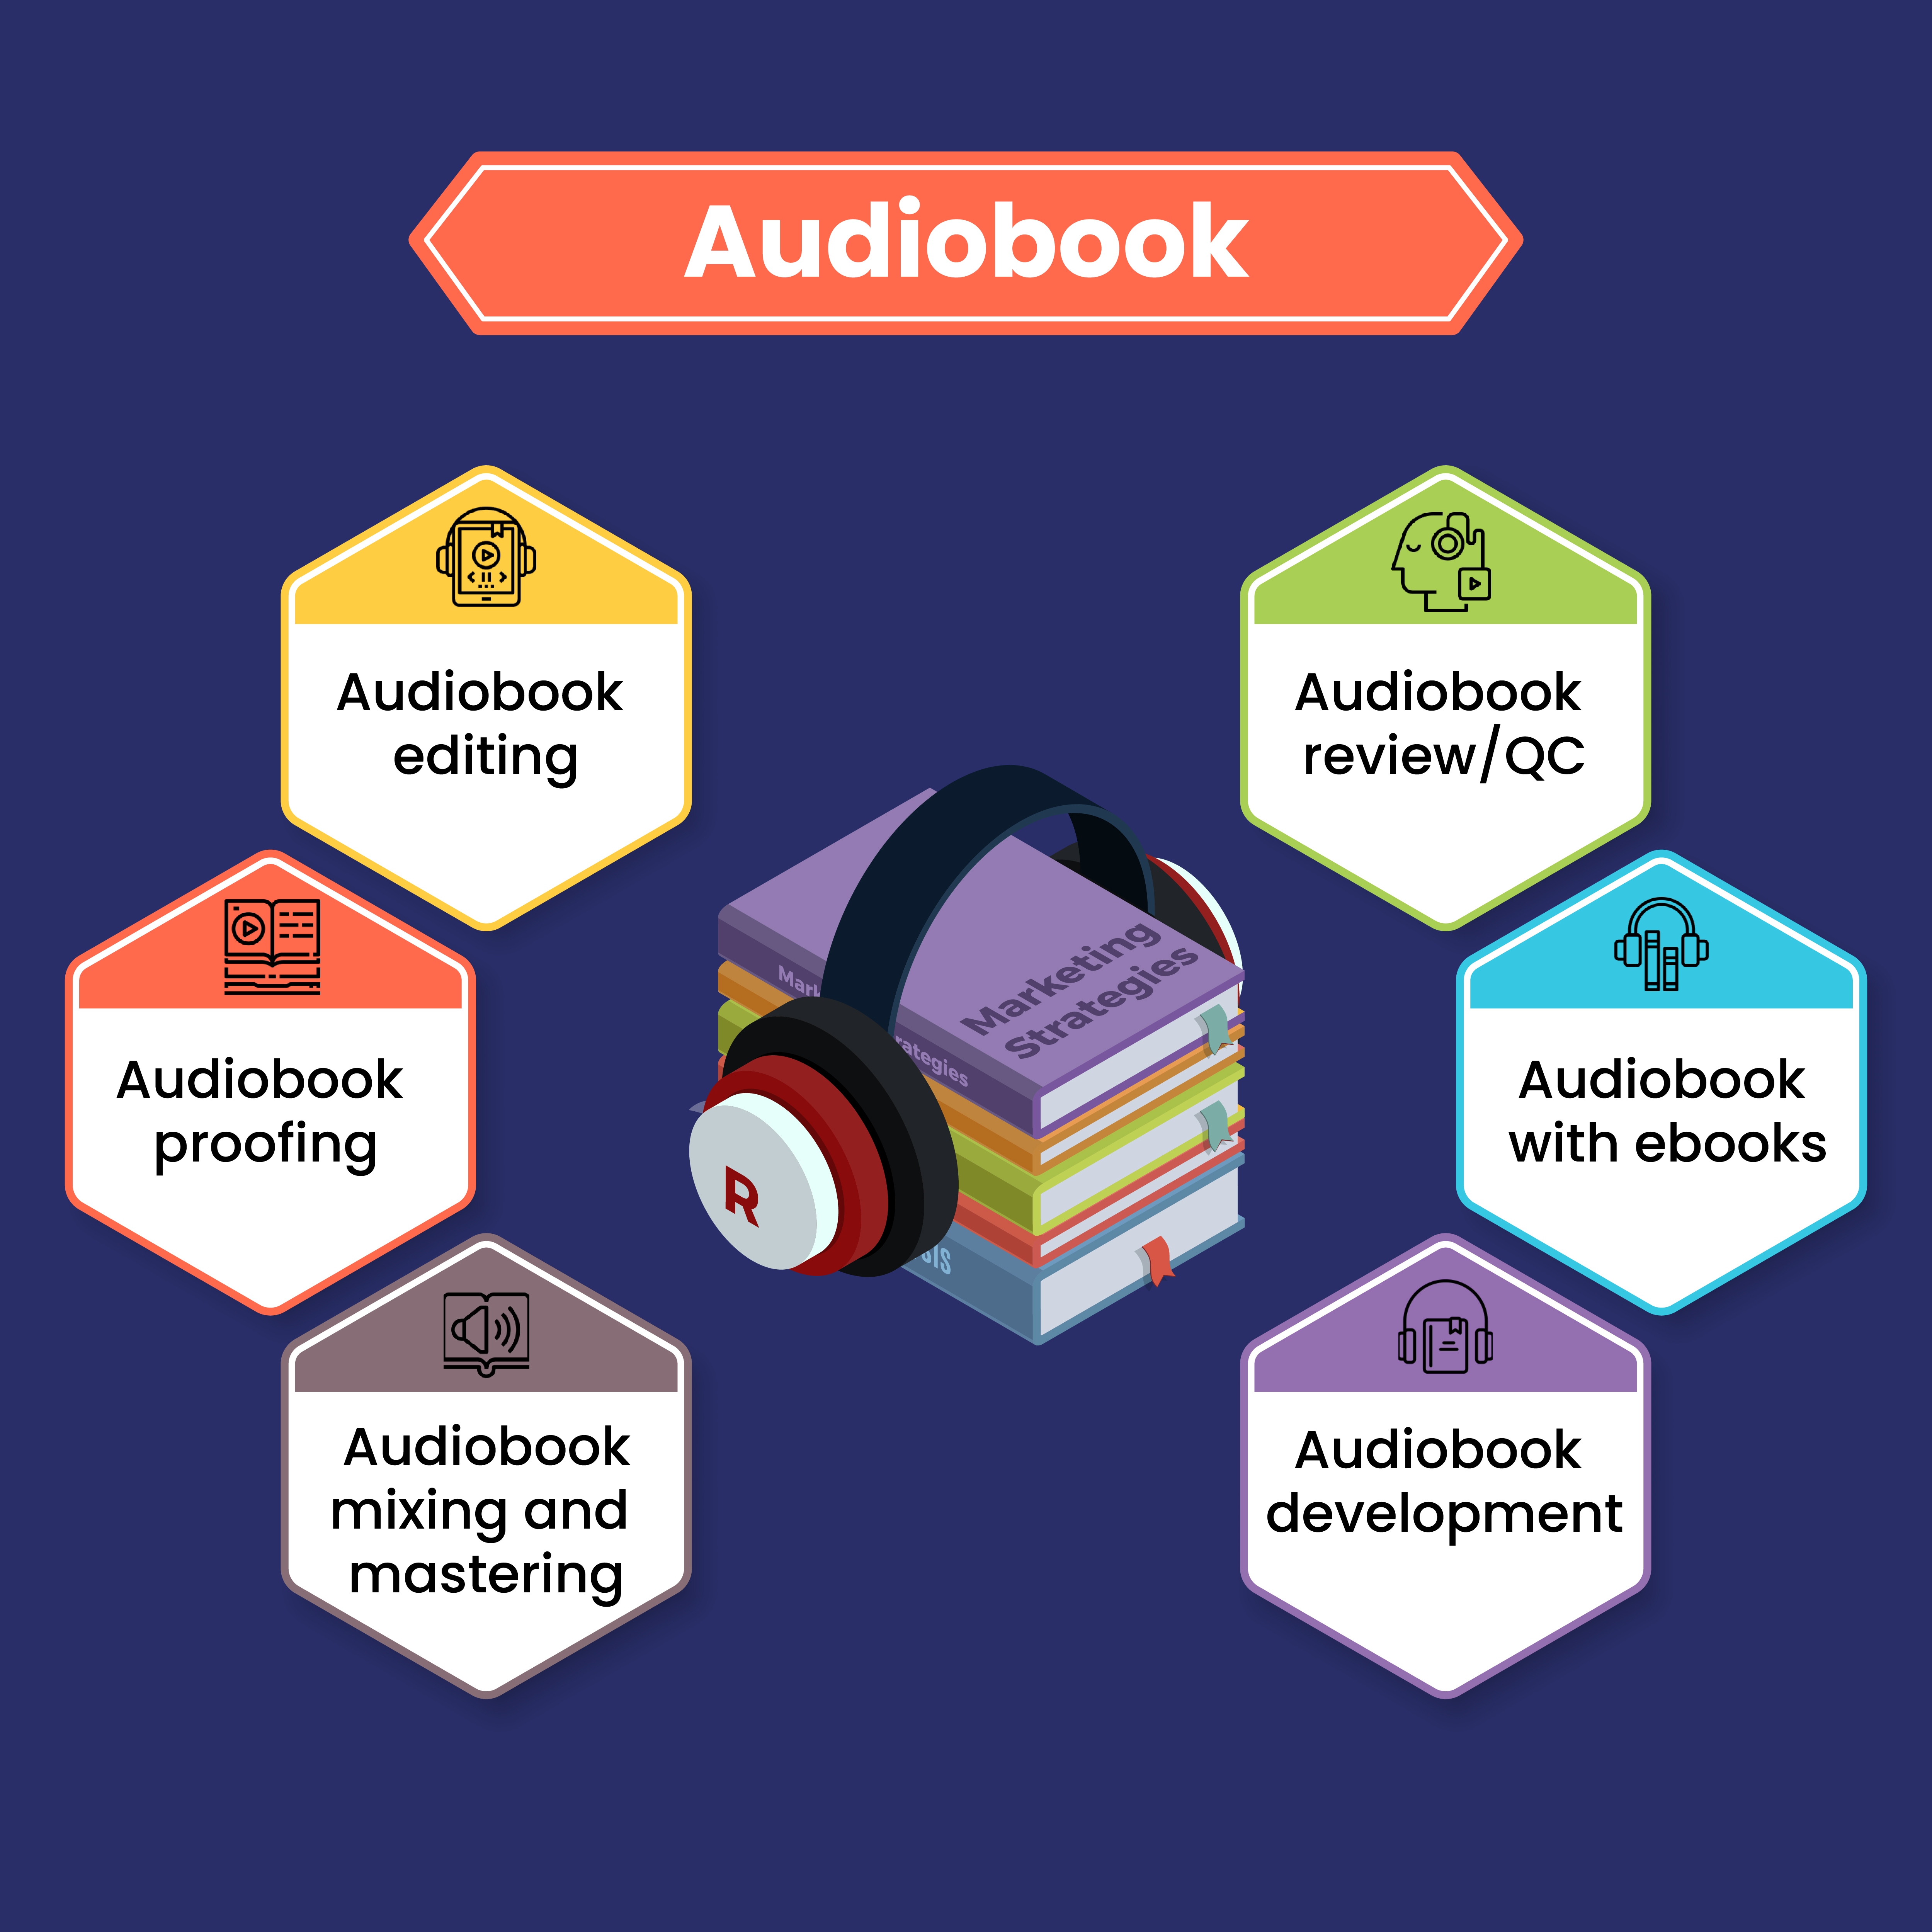 Audiobooks with ebook